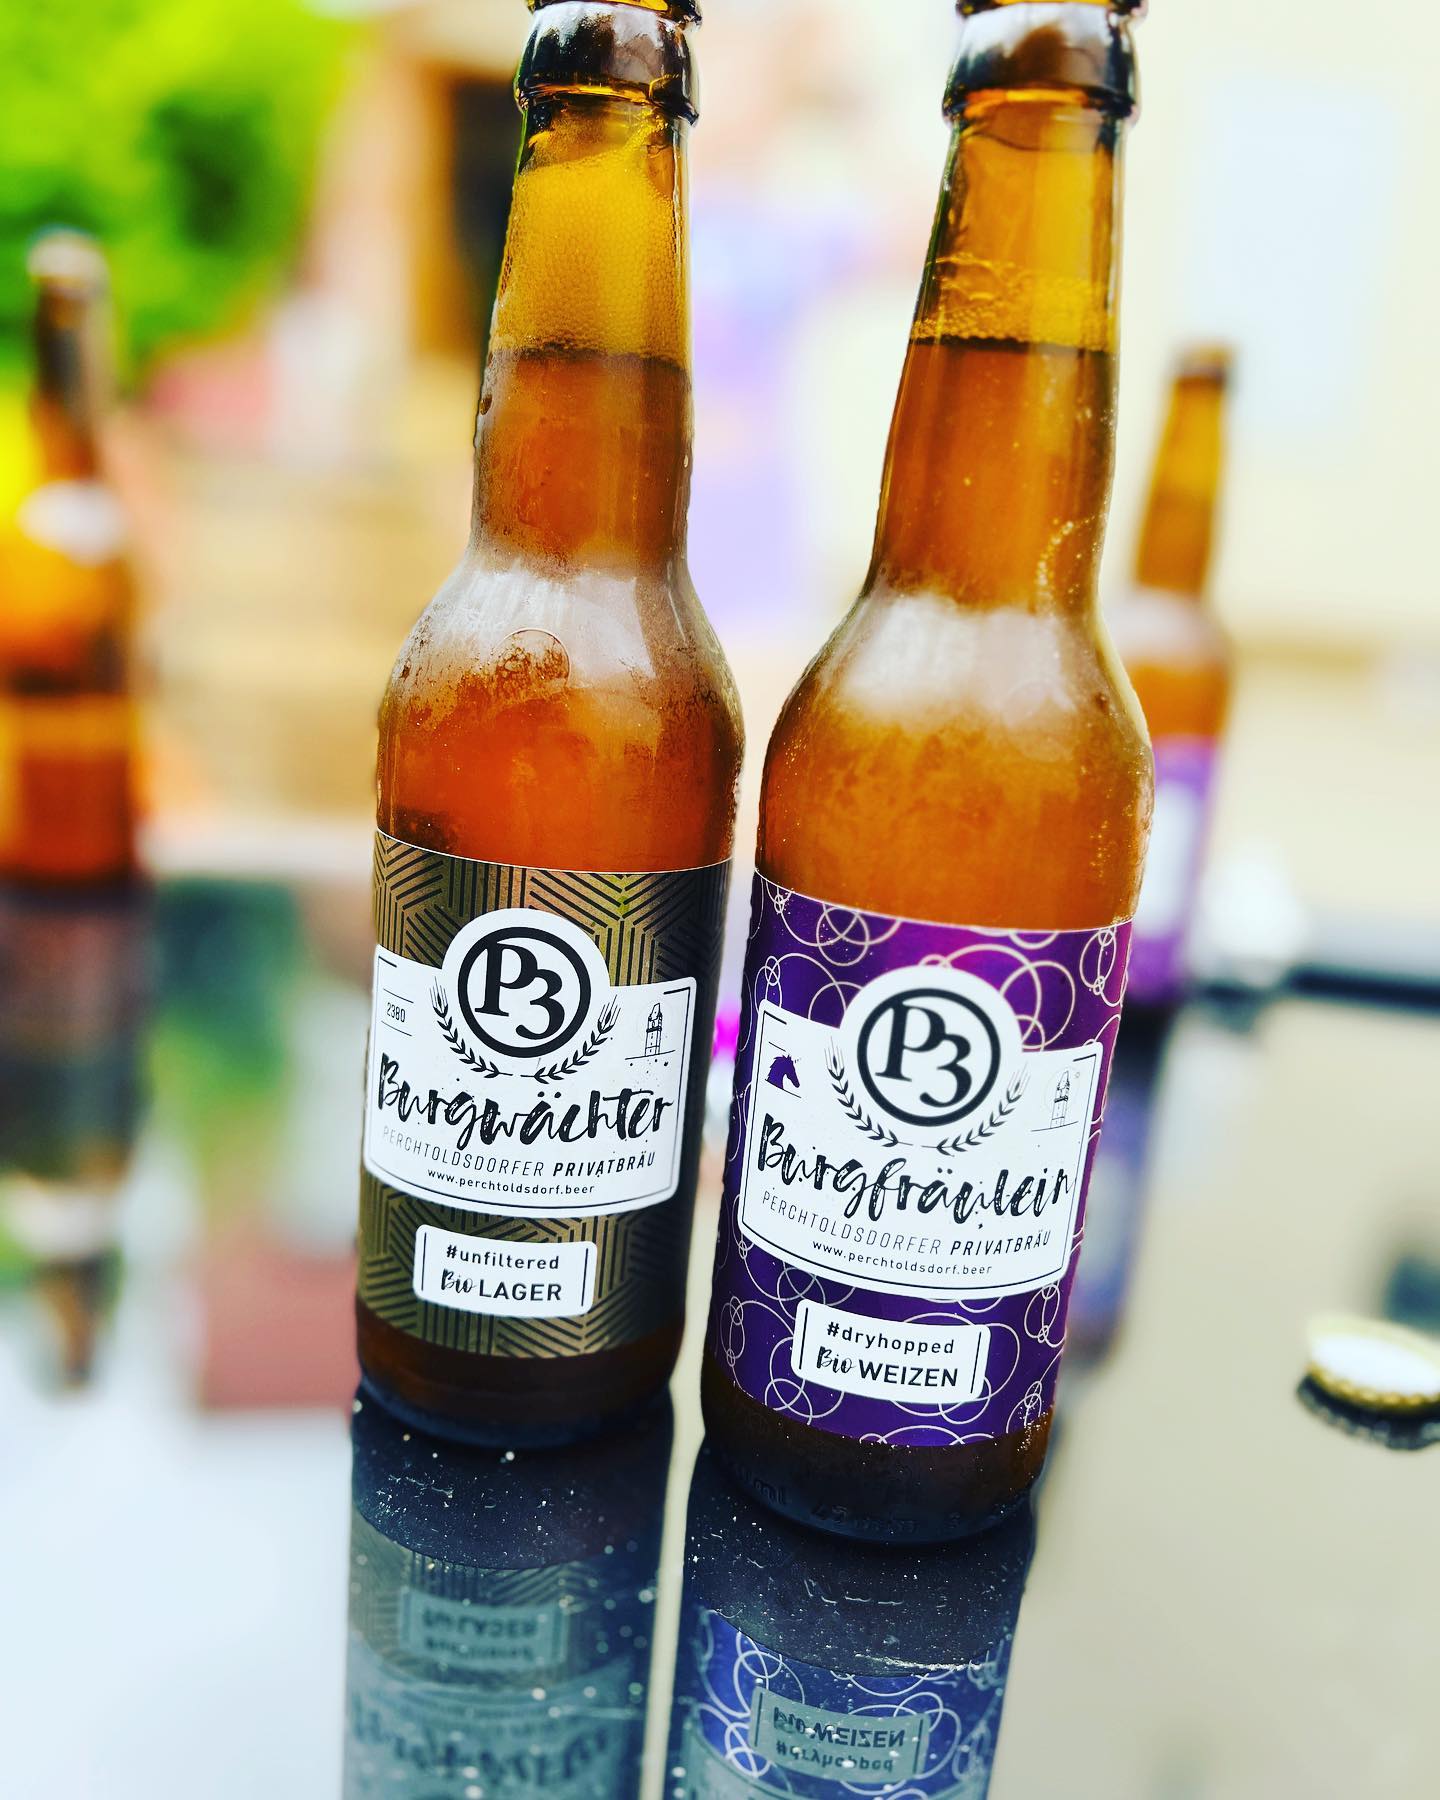 Unsere #bio #biere #burgwächter #burgfräulein #bier #beer #instabeer #beerstagram #brewery #craftbeer #birra #beerfromaustria #perchtoldsdorf